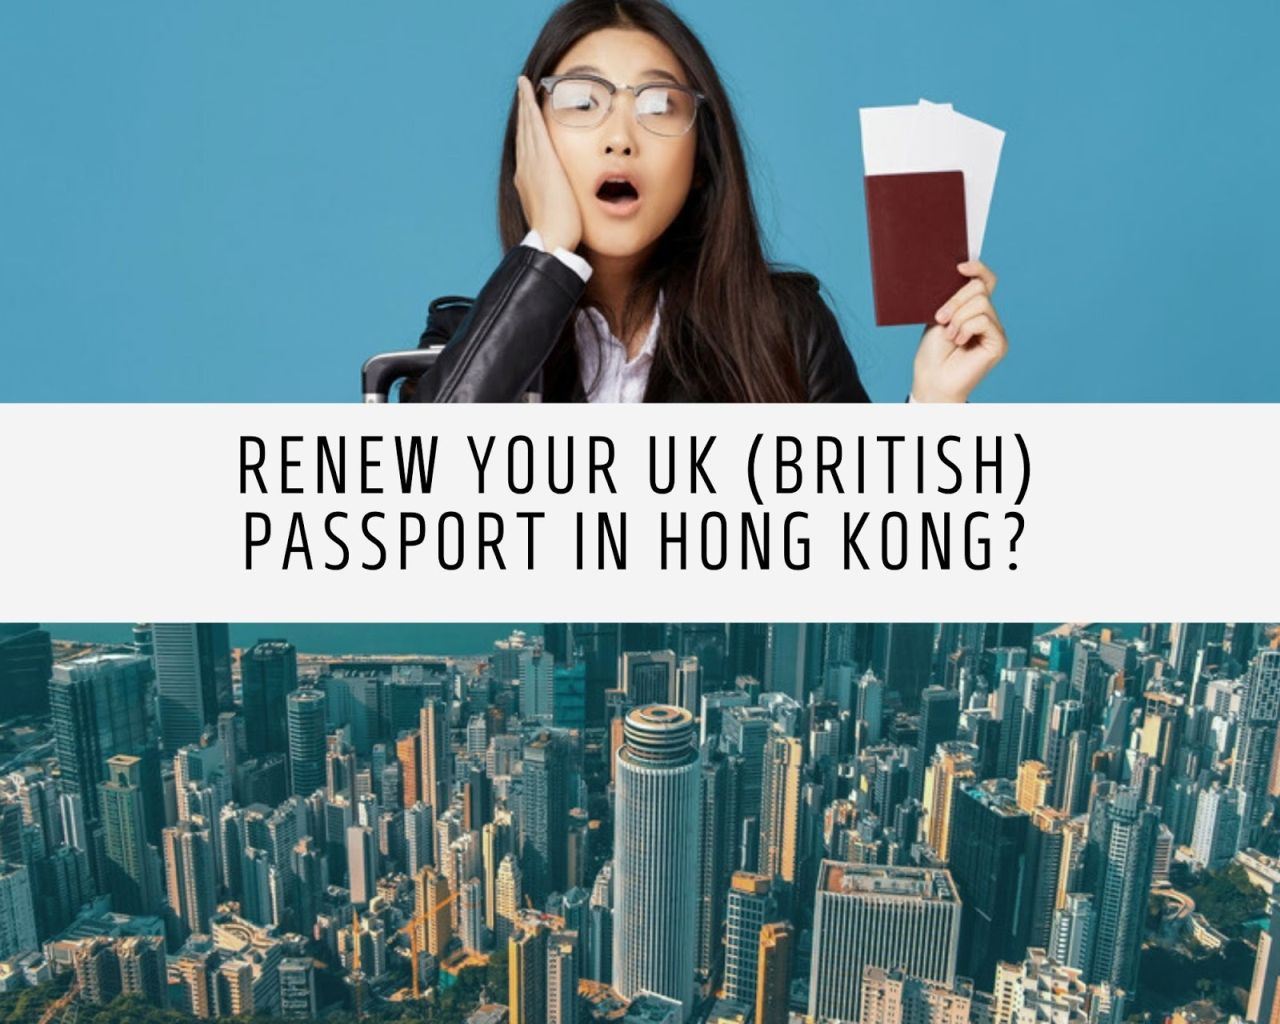 How to renew your UK passport in Hong Kong?